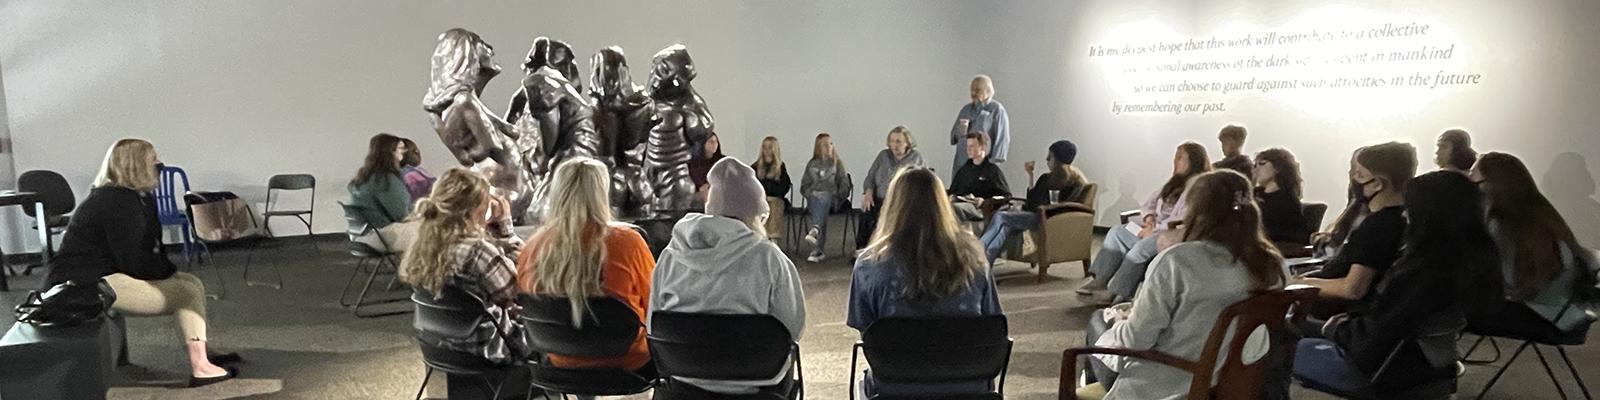 class sitting around a sculpture discussing art